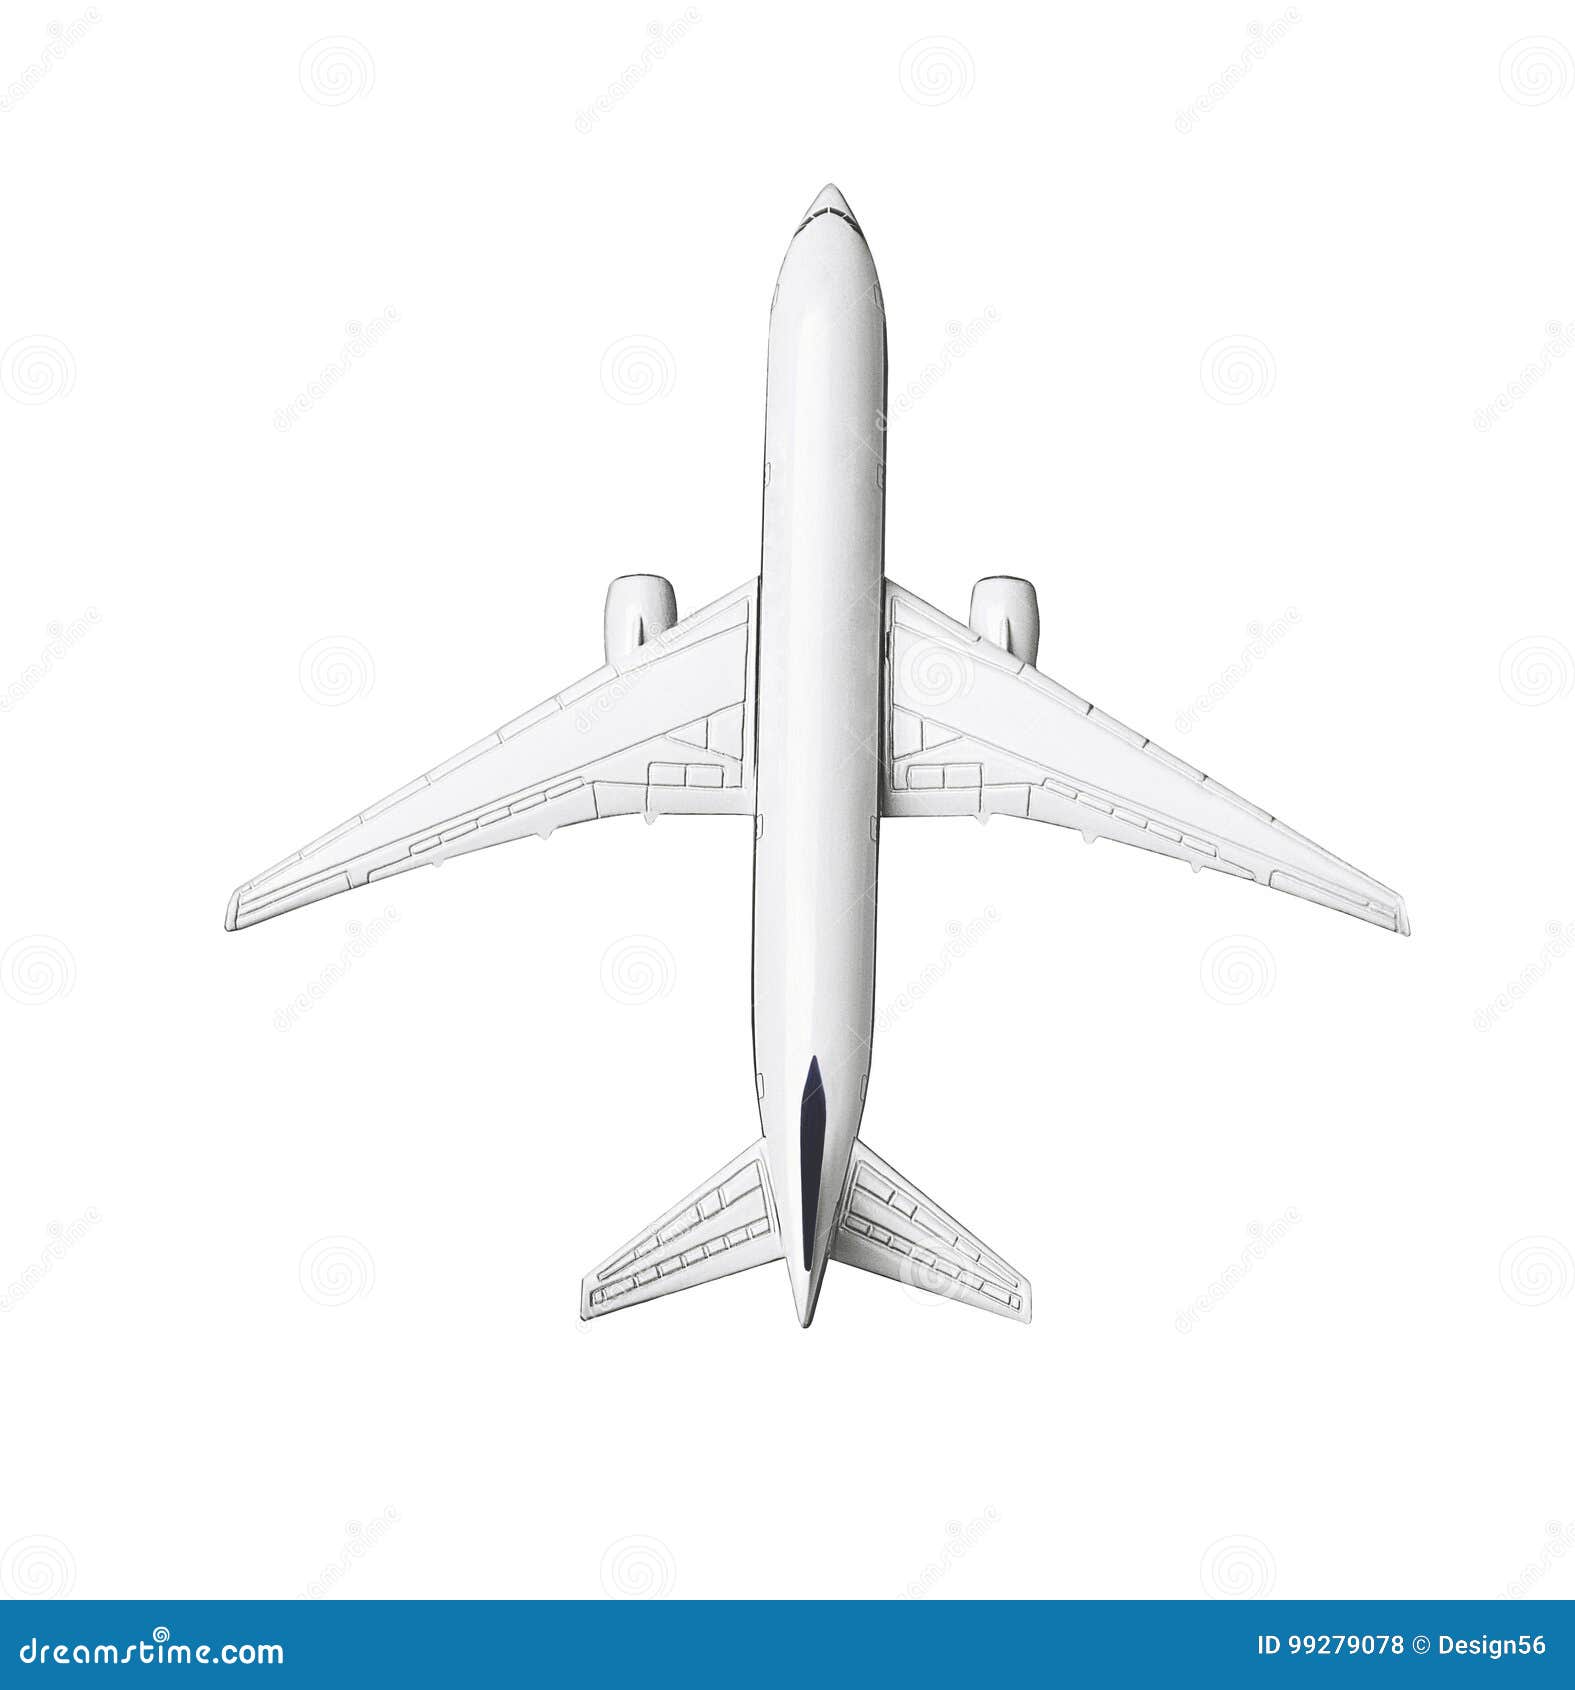 miniature model of commercial jetliner